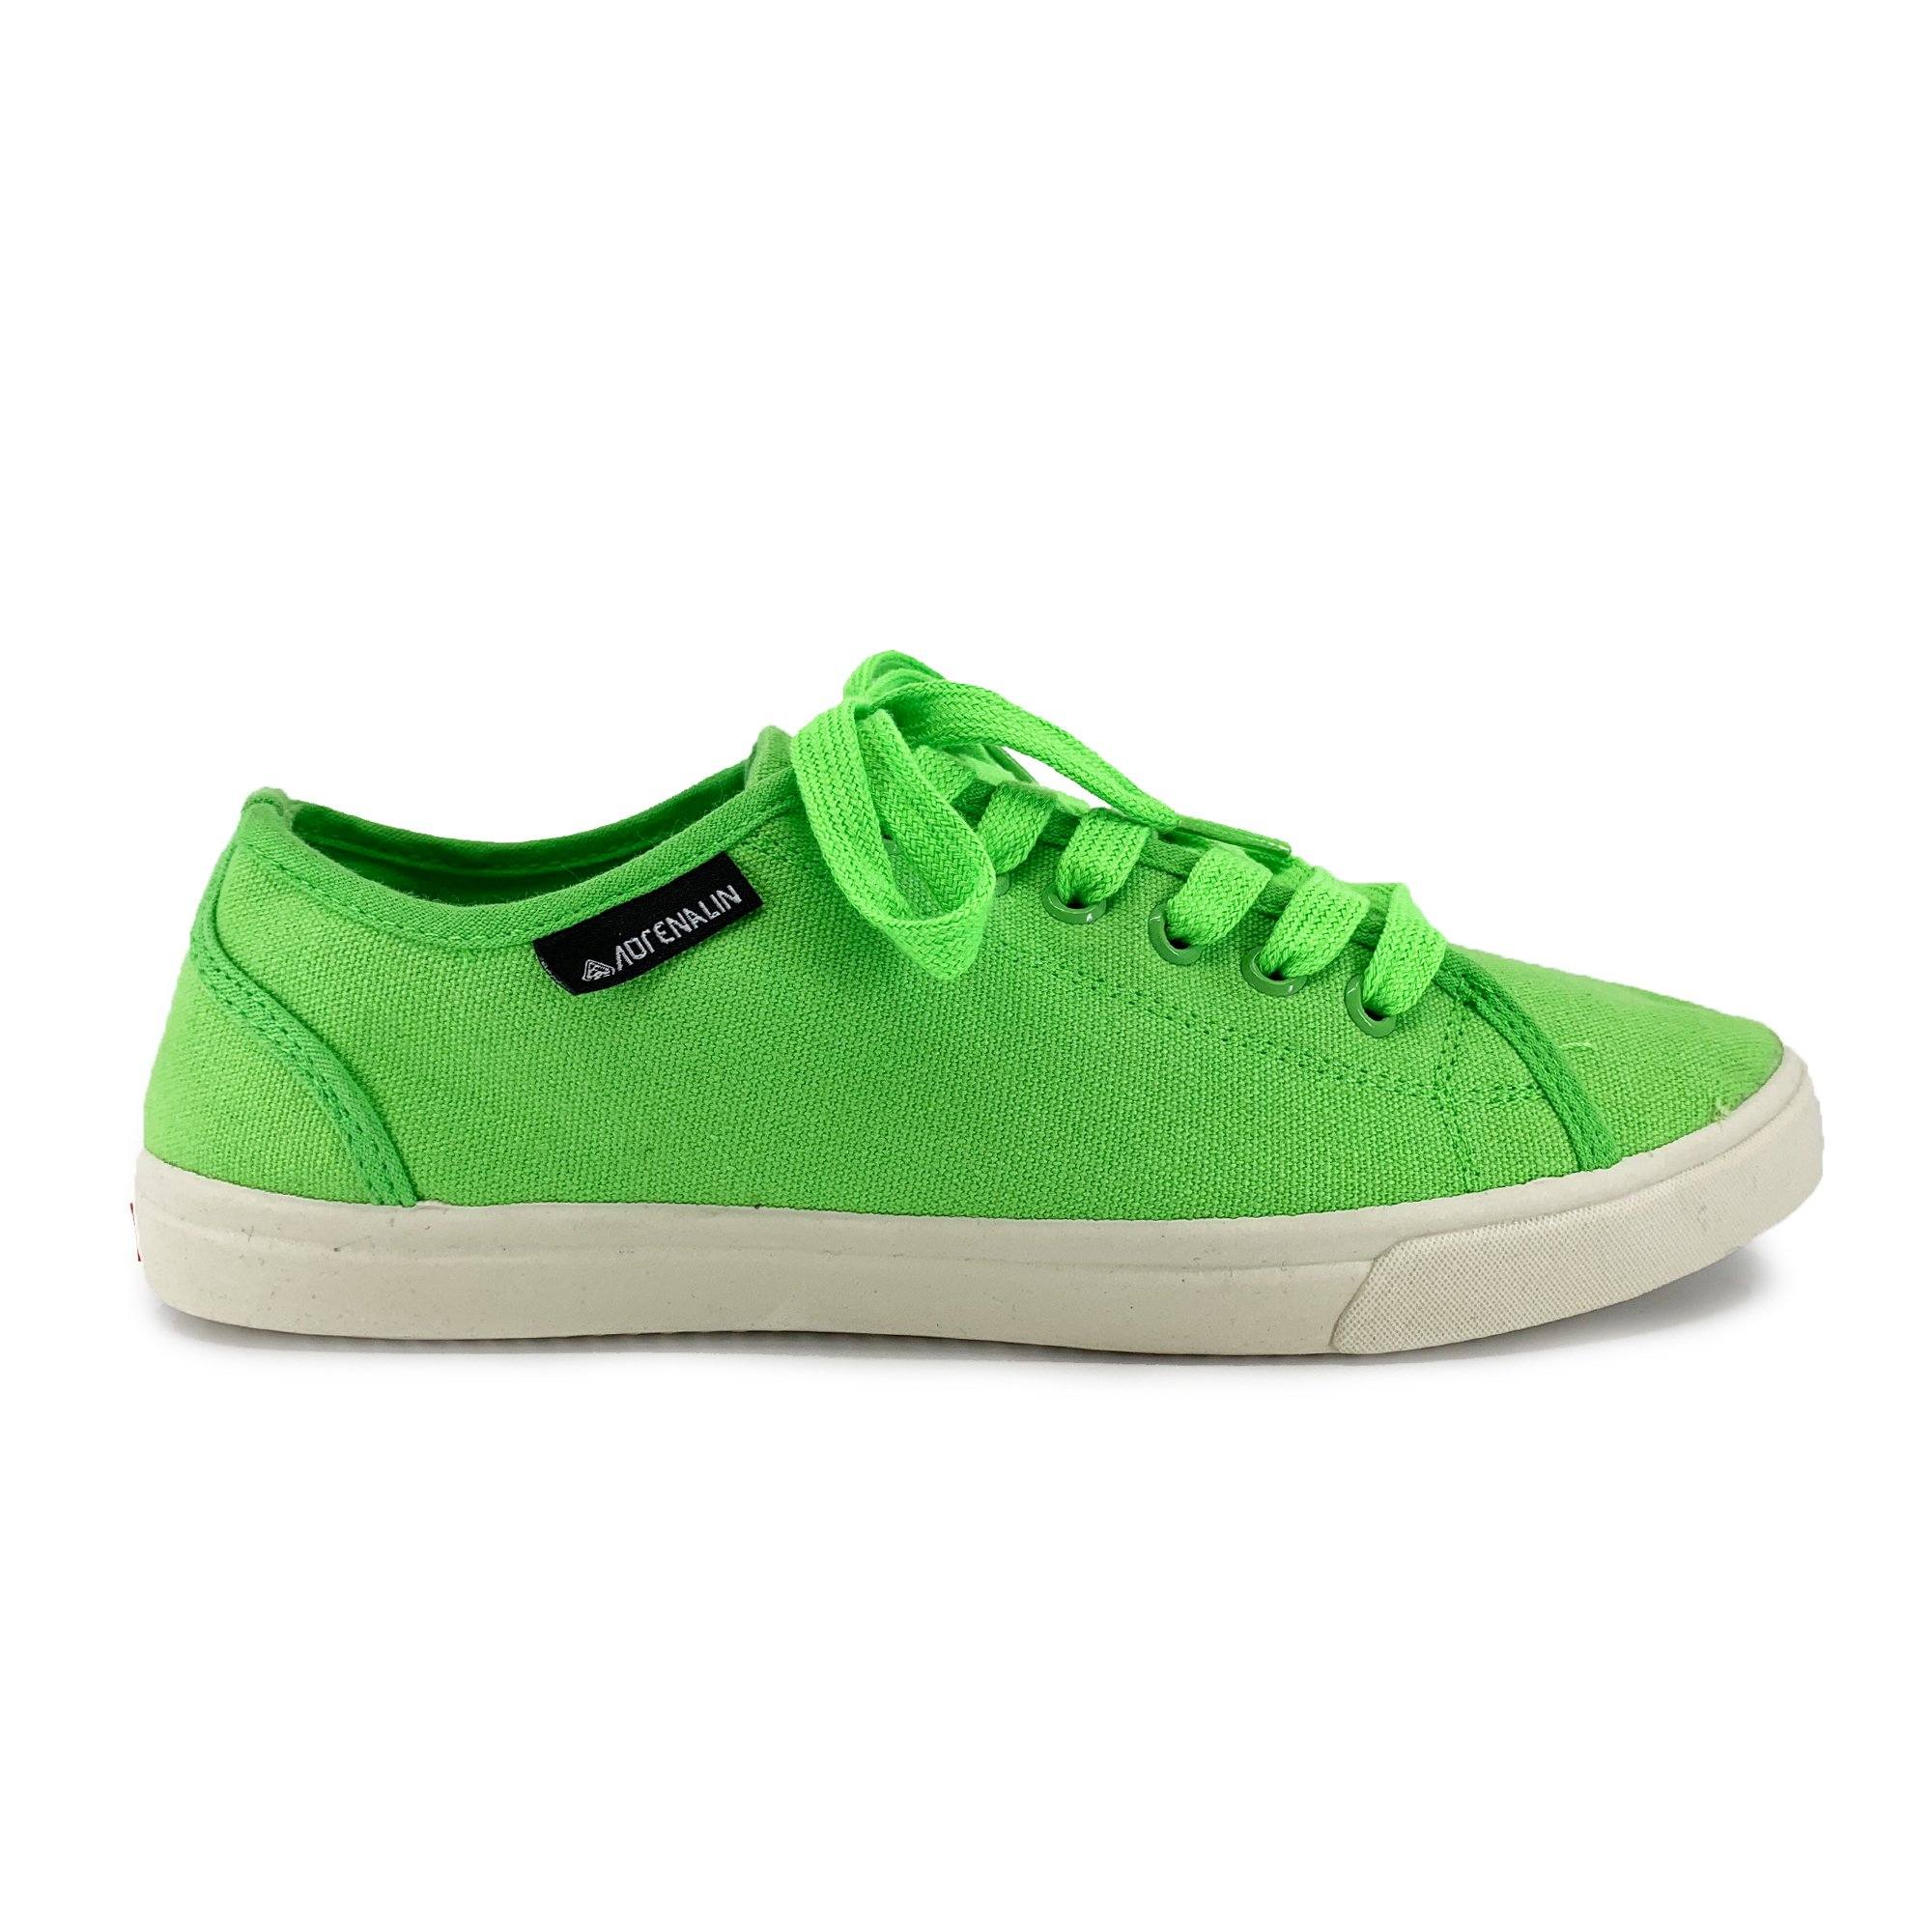 green canvas tennis shoes